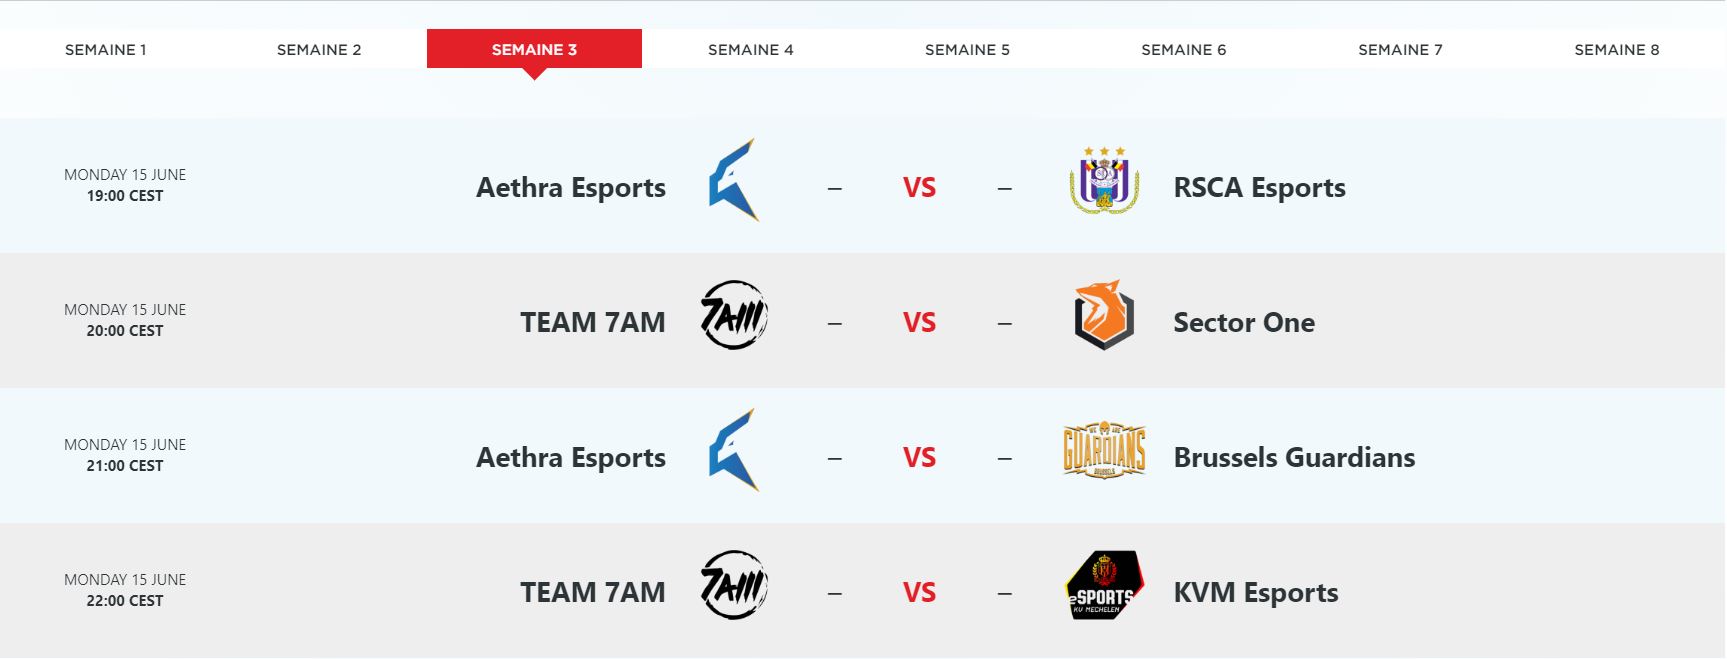 Schedule Day 3 Belgian League League of Legends LoL